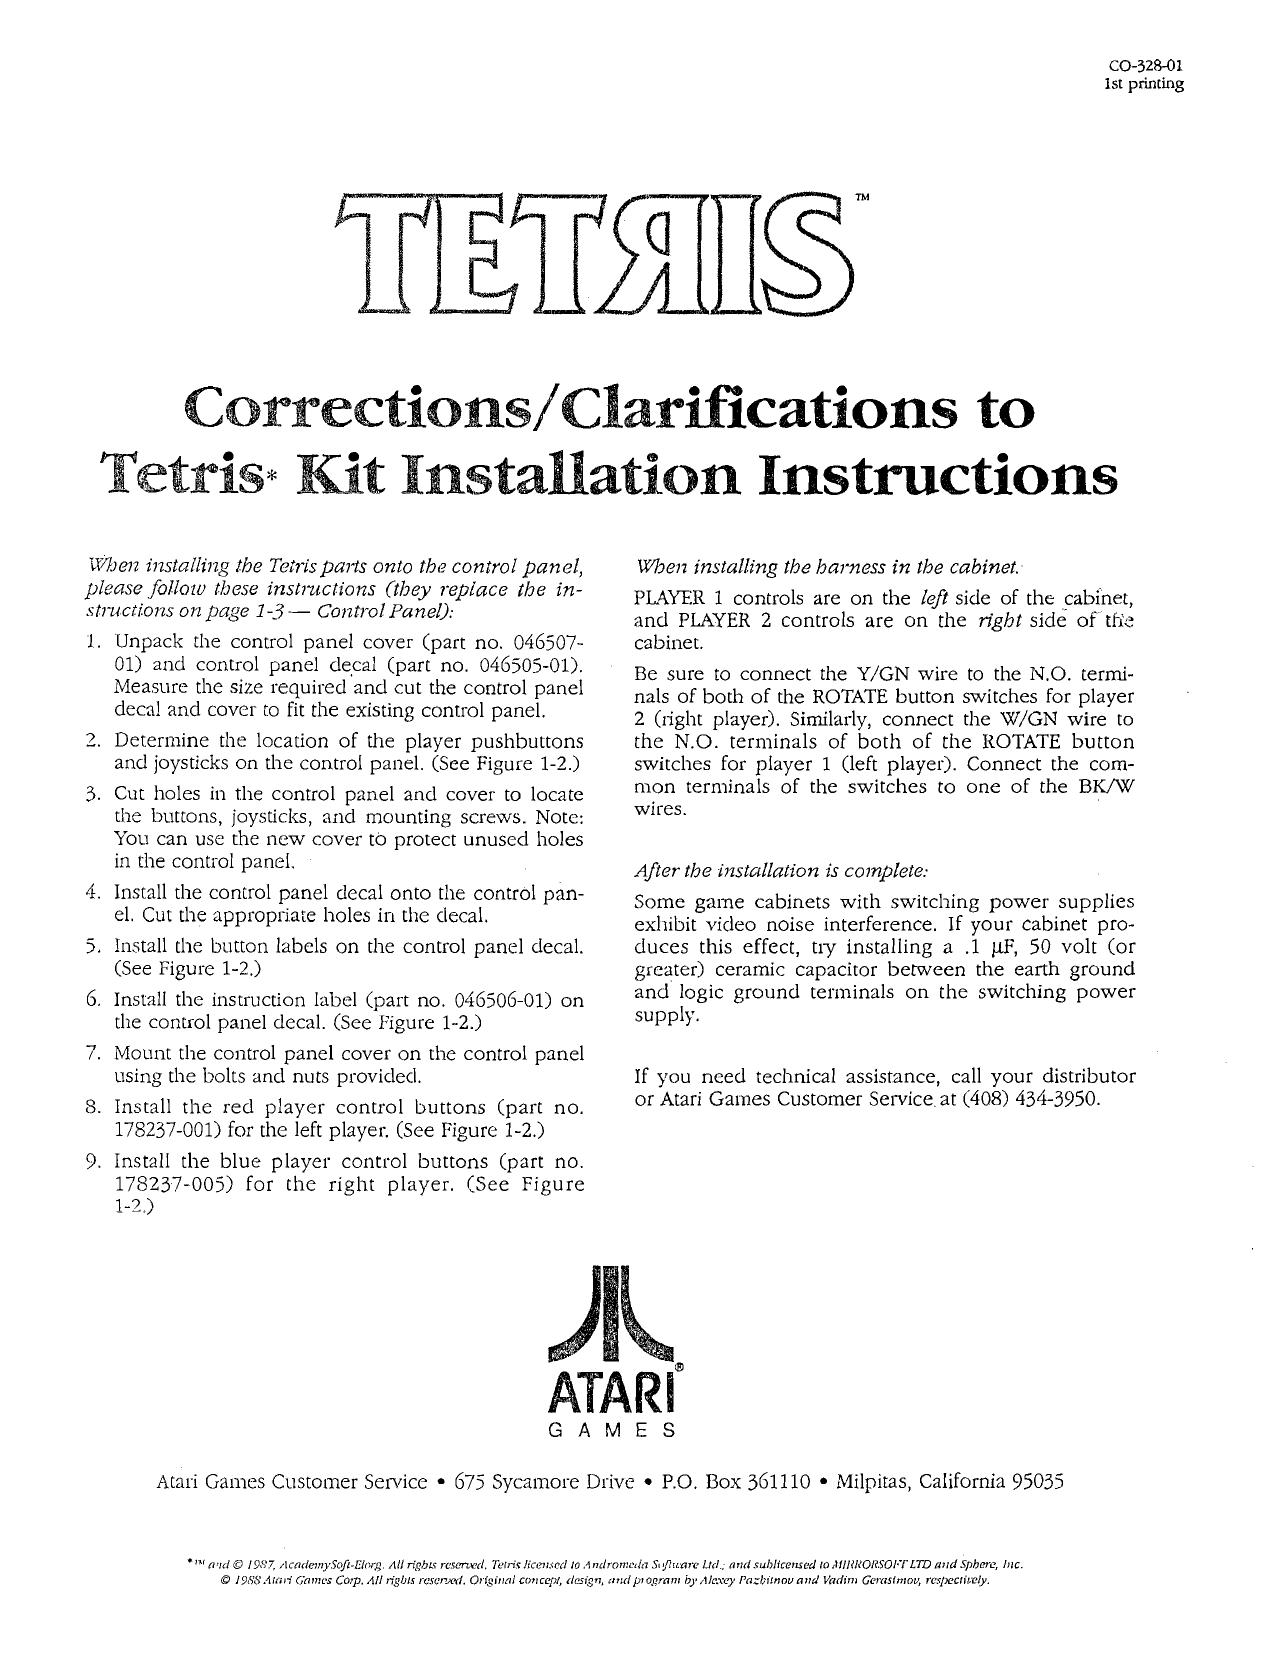 Tetris CO-328-01 1st Printing